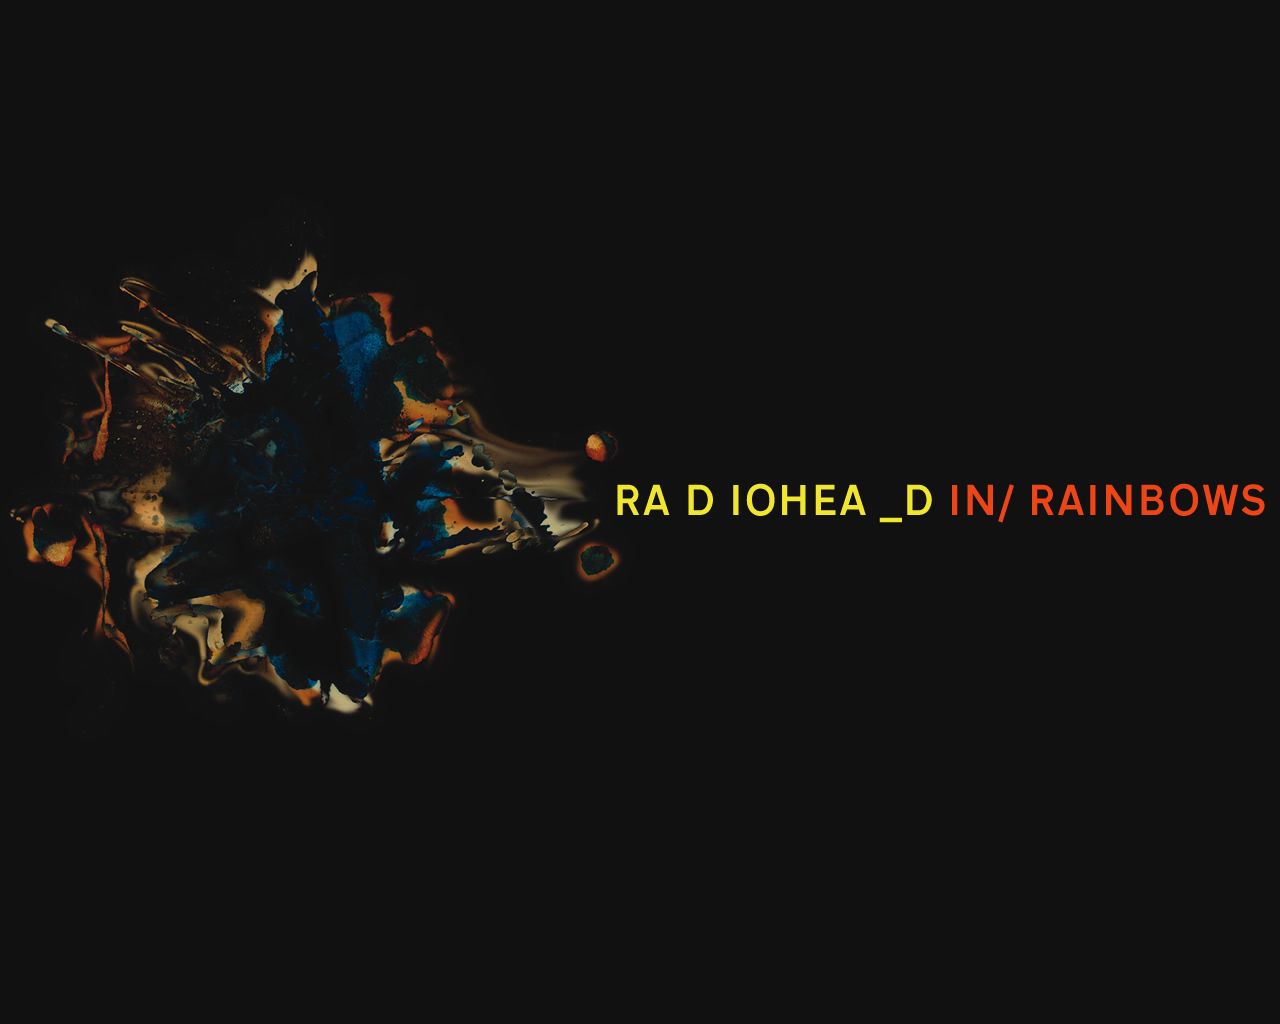 In Rainbows - Radiohead Wallpaper 27519259 - Fanpop